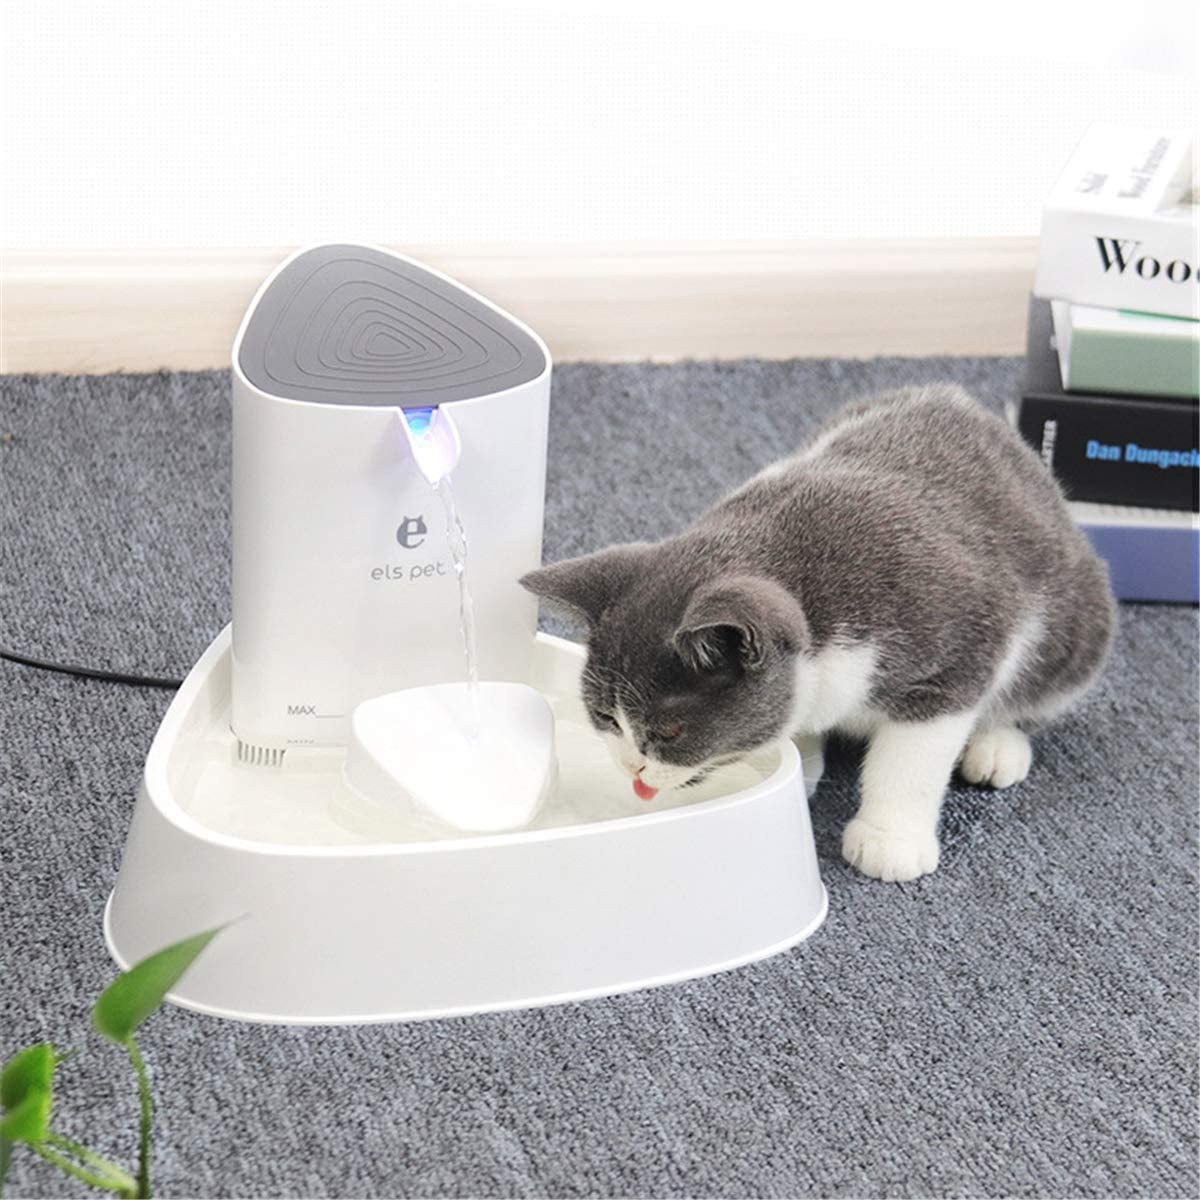  XUEE Fuente para Gatos LED Fuente automática para Beber Agua para Mascotas Dispensador de Agua para Mascotas con Flujo de Agua Ajustable, Ideal para Gatos y Perros pequeños 